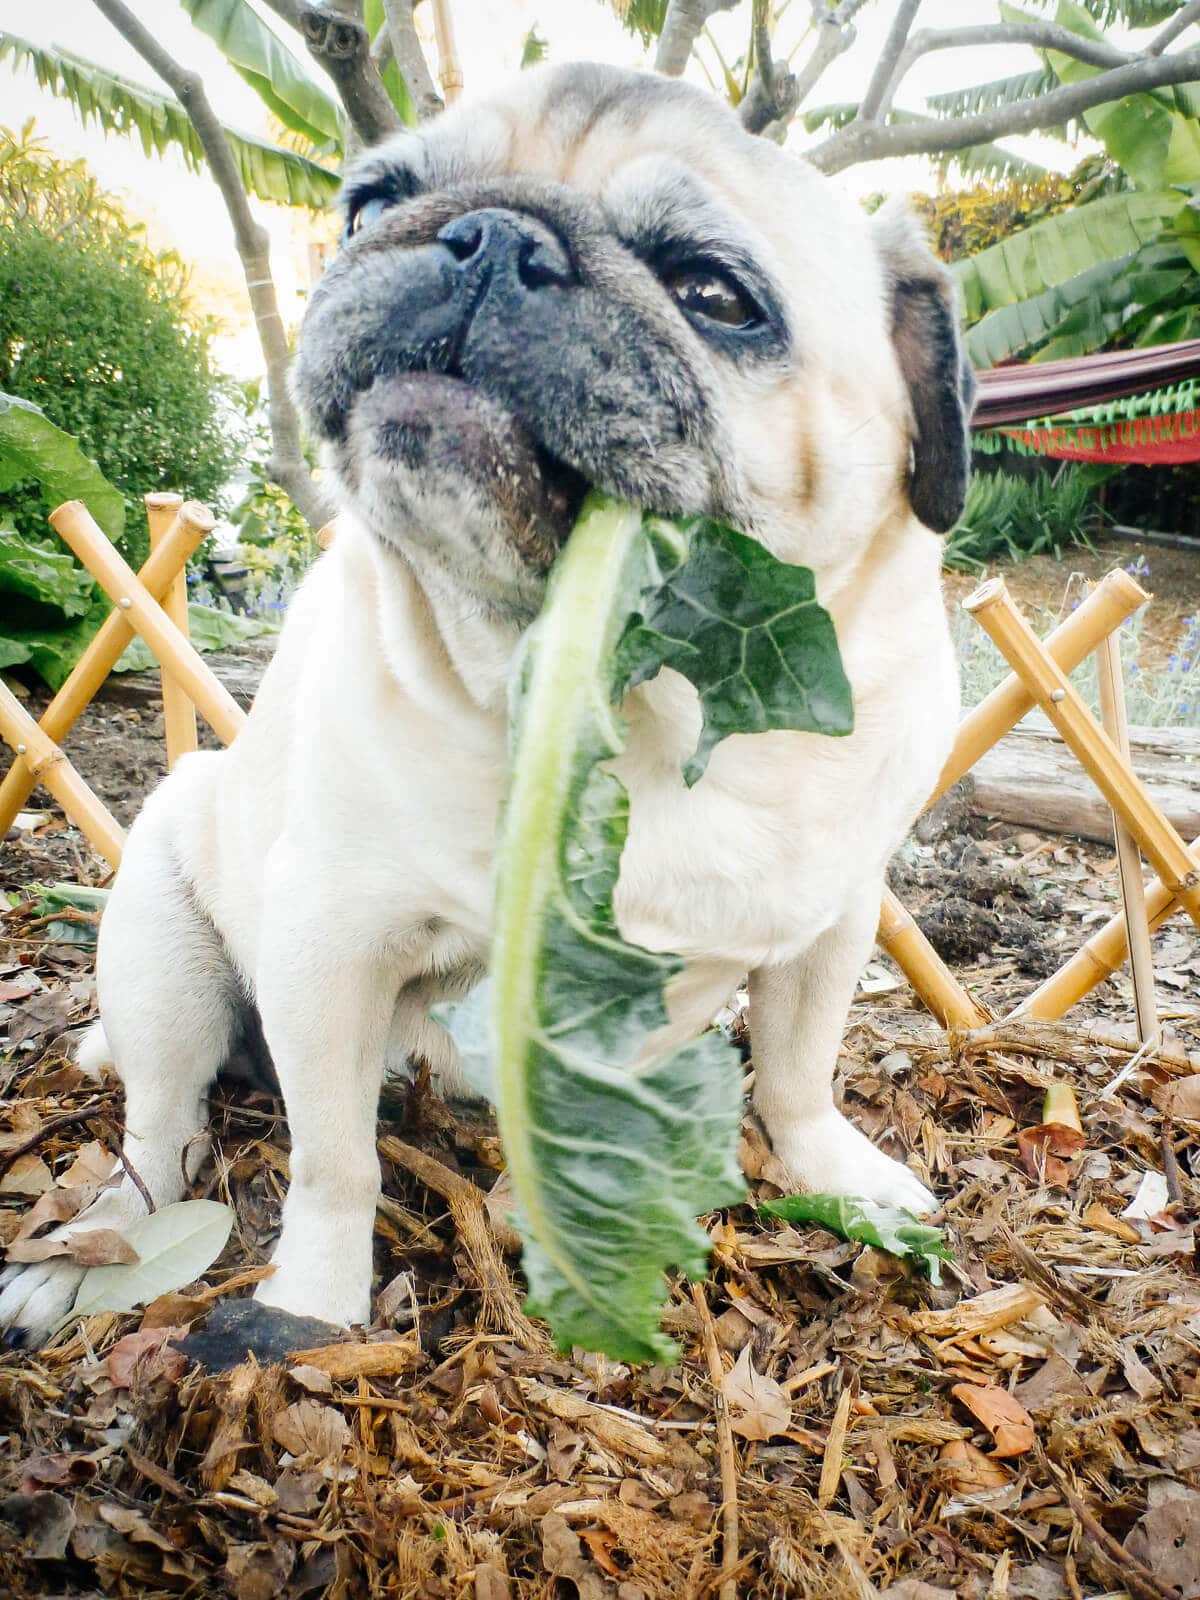 My pug enjoying broccoli leaves from the garden